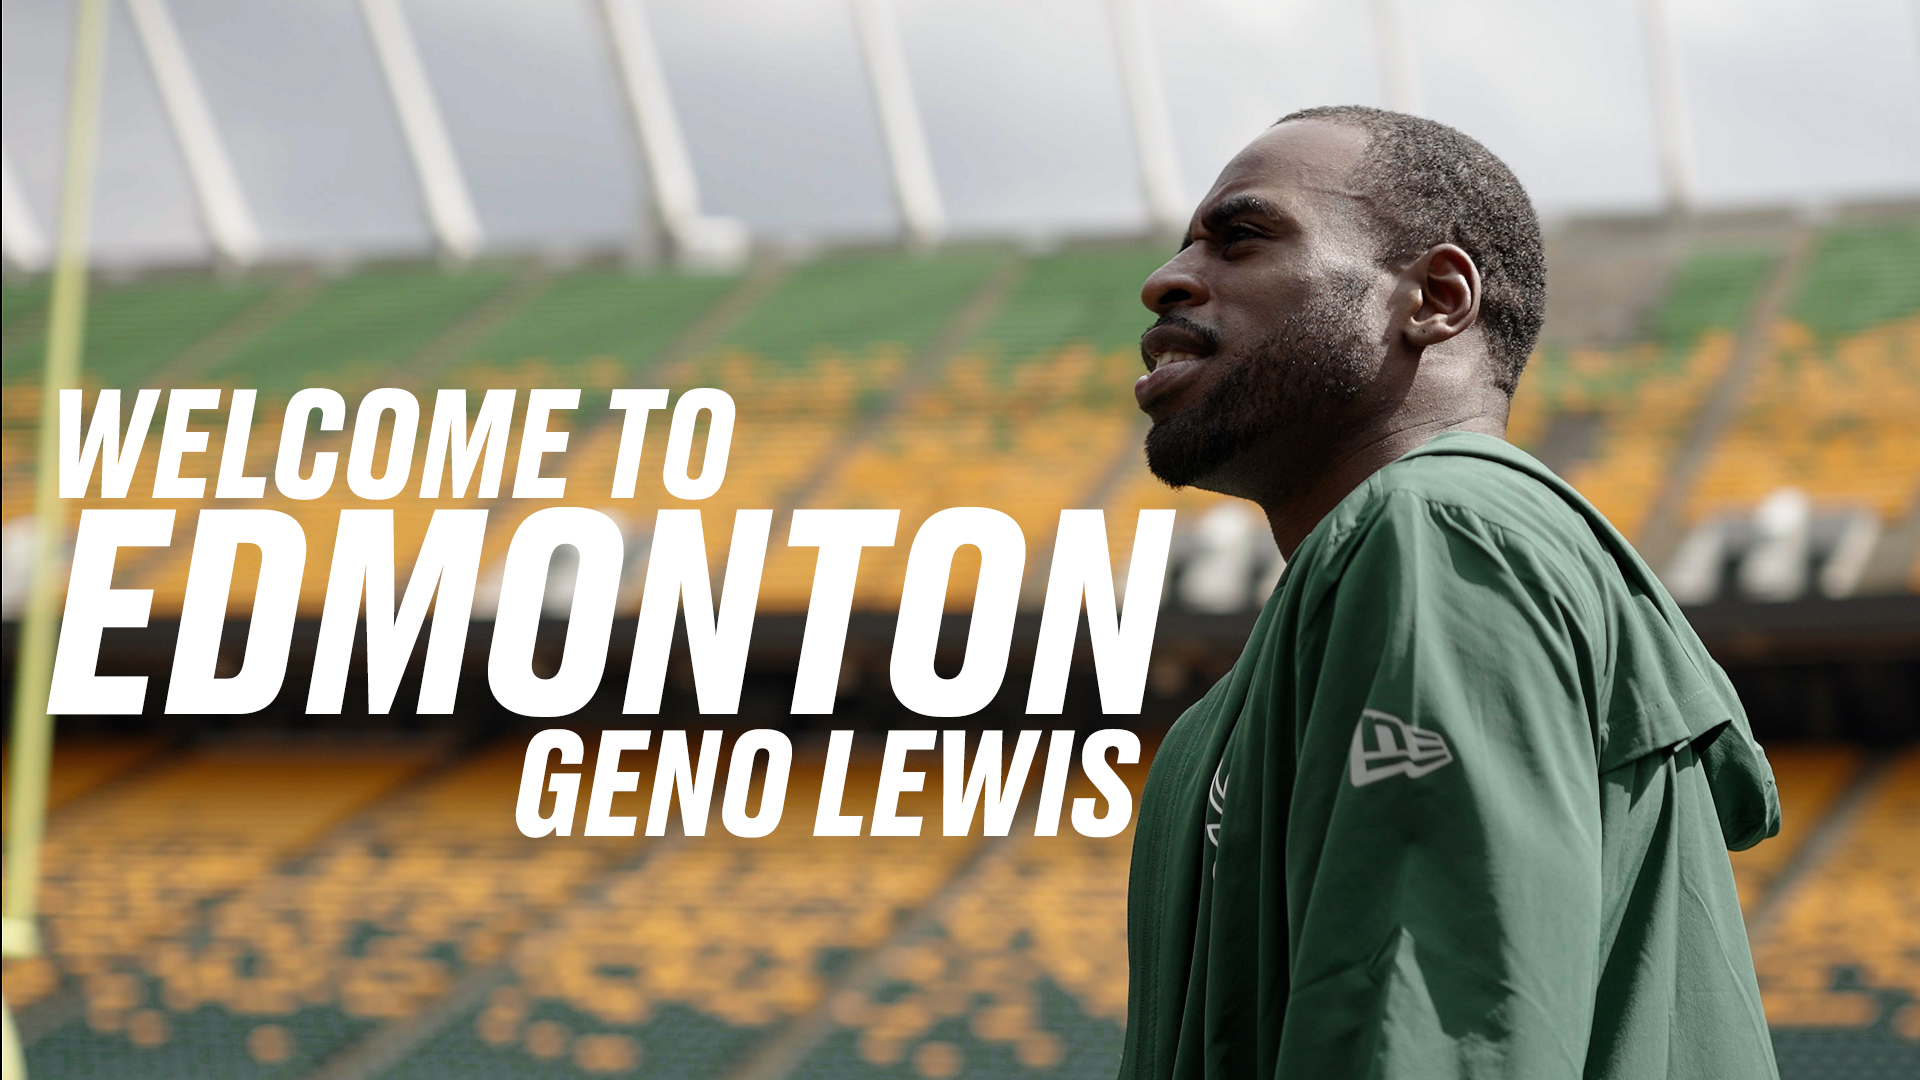 Welcome to Edmonton, Geno Lewis